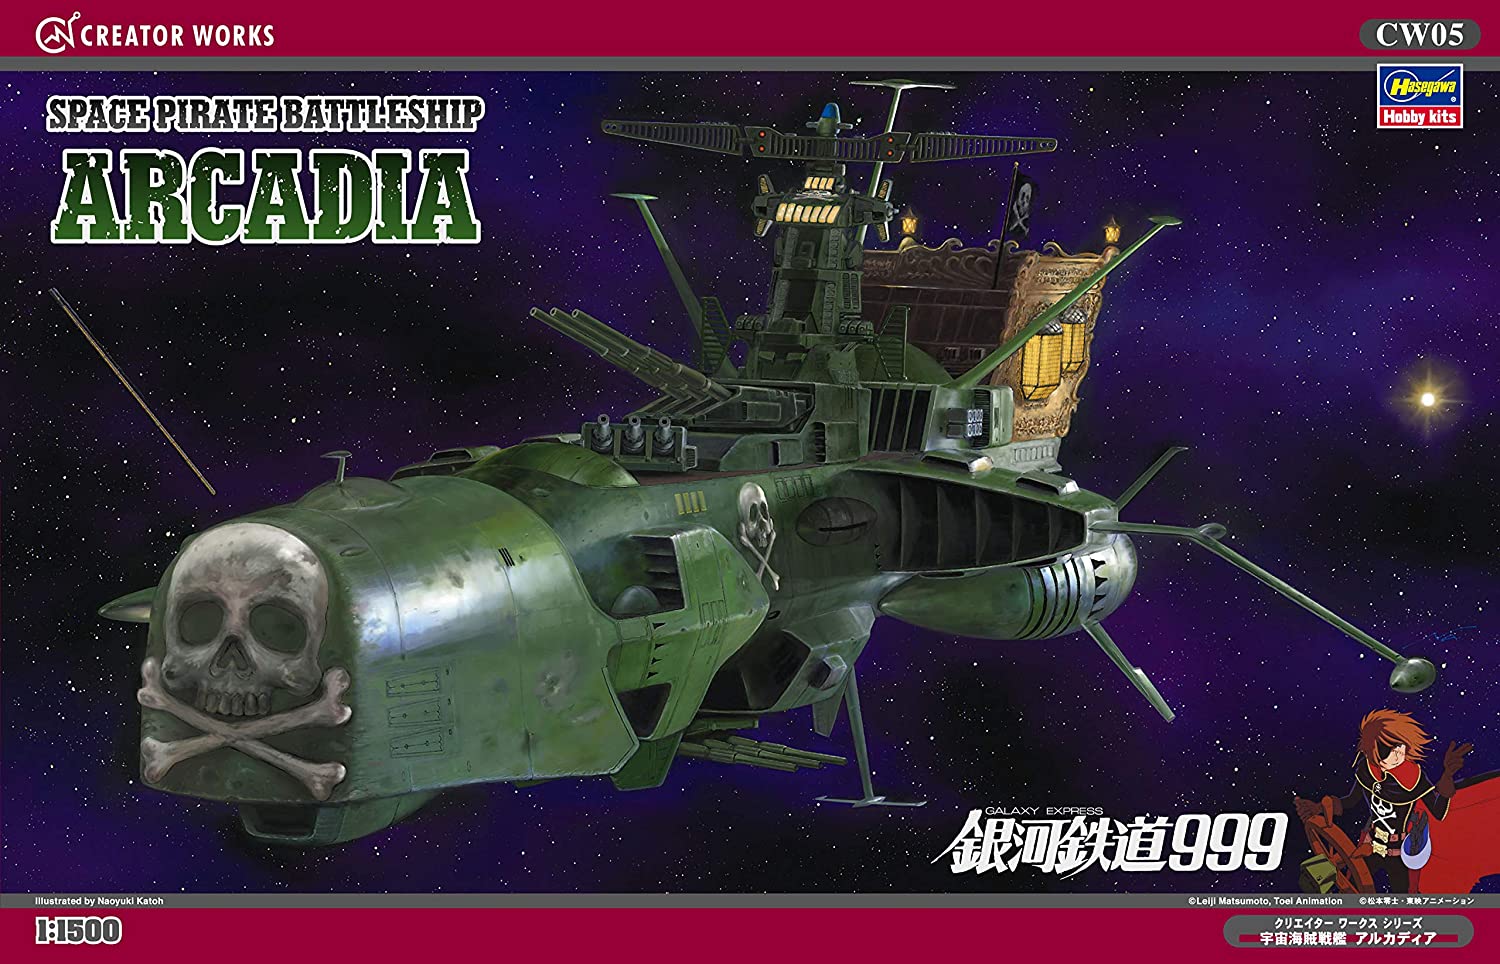 Hasegawa 1/1500: Space Pirate Battleship ARCADIA Third ship (Galaxy Express 999) 